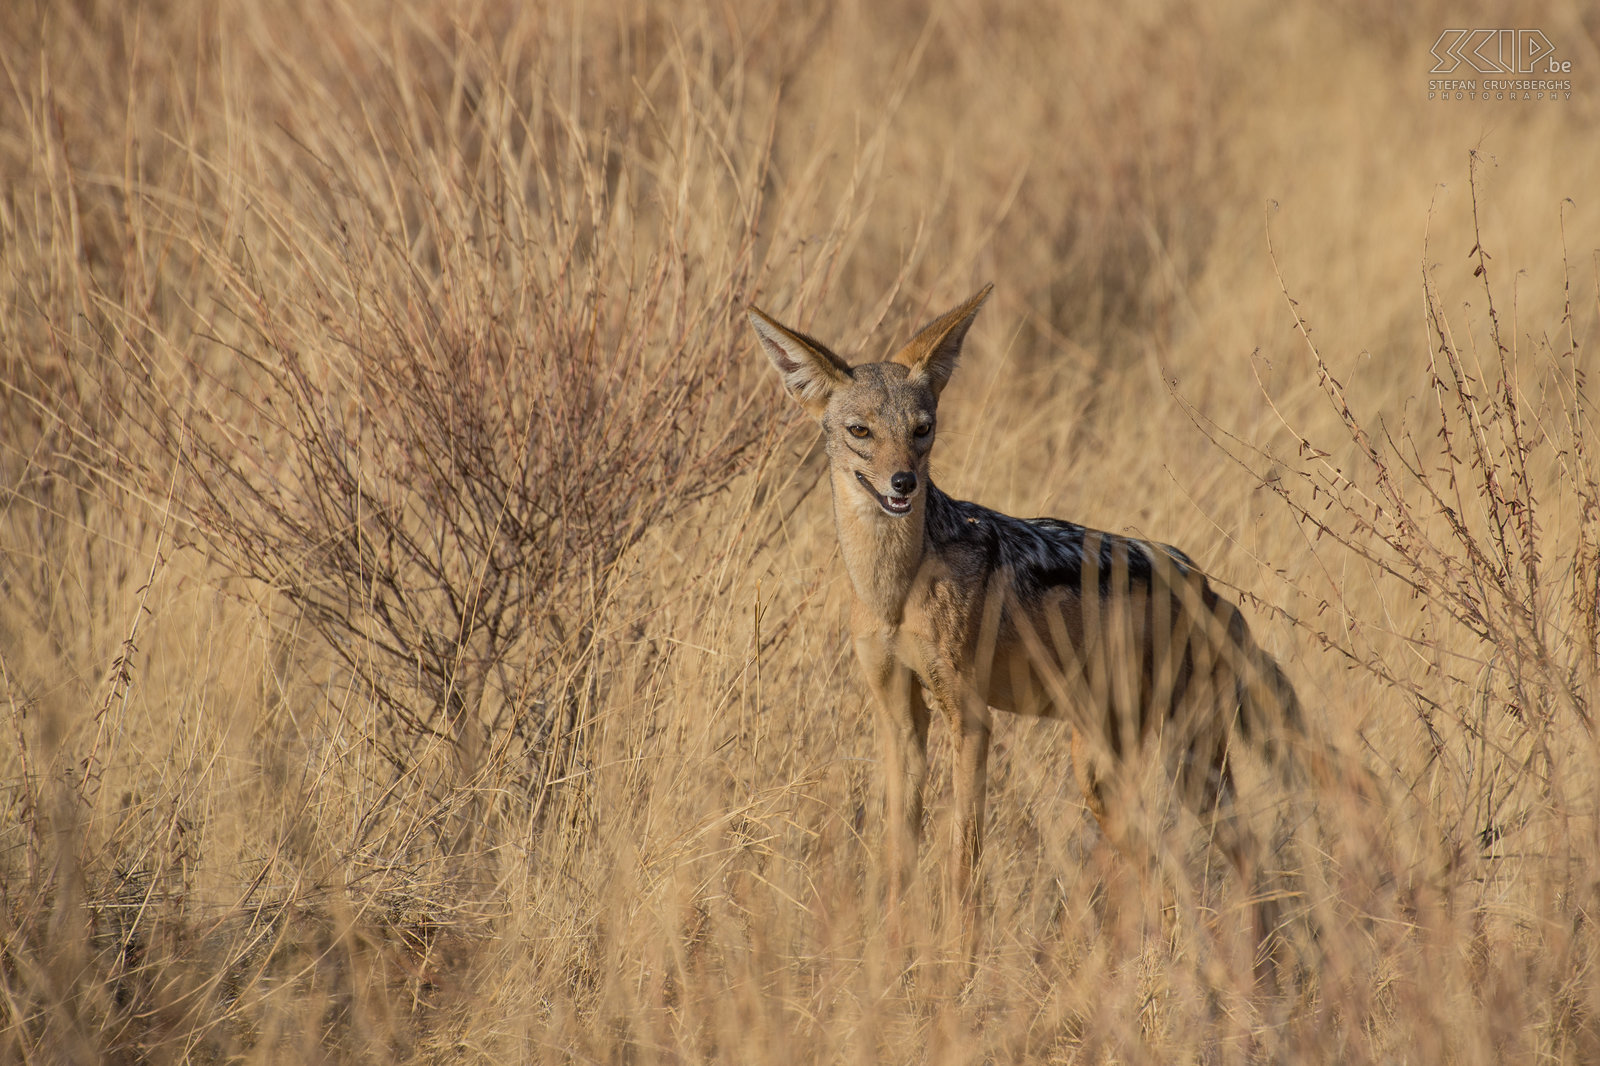 Samburu - Jakhal Jonge zadeljakhals (Black-backed jackal, Canis mesomelas). Stefan Cruysberghs